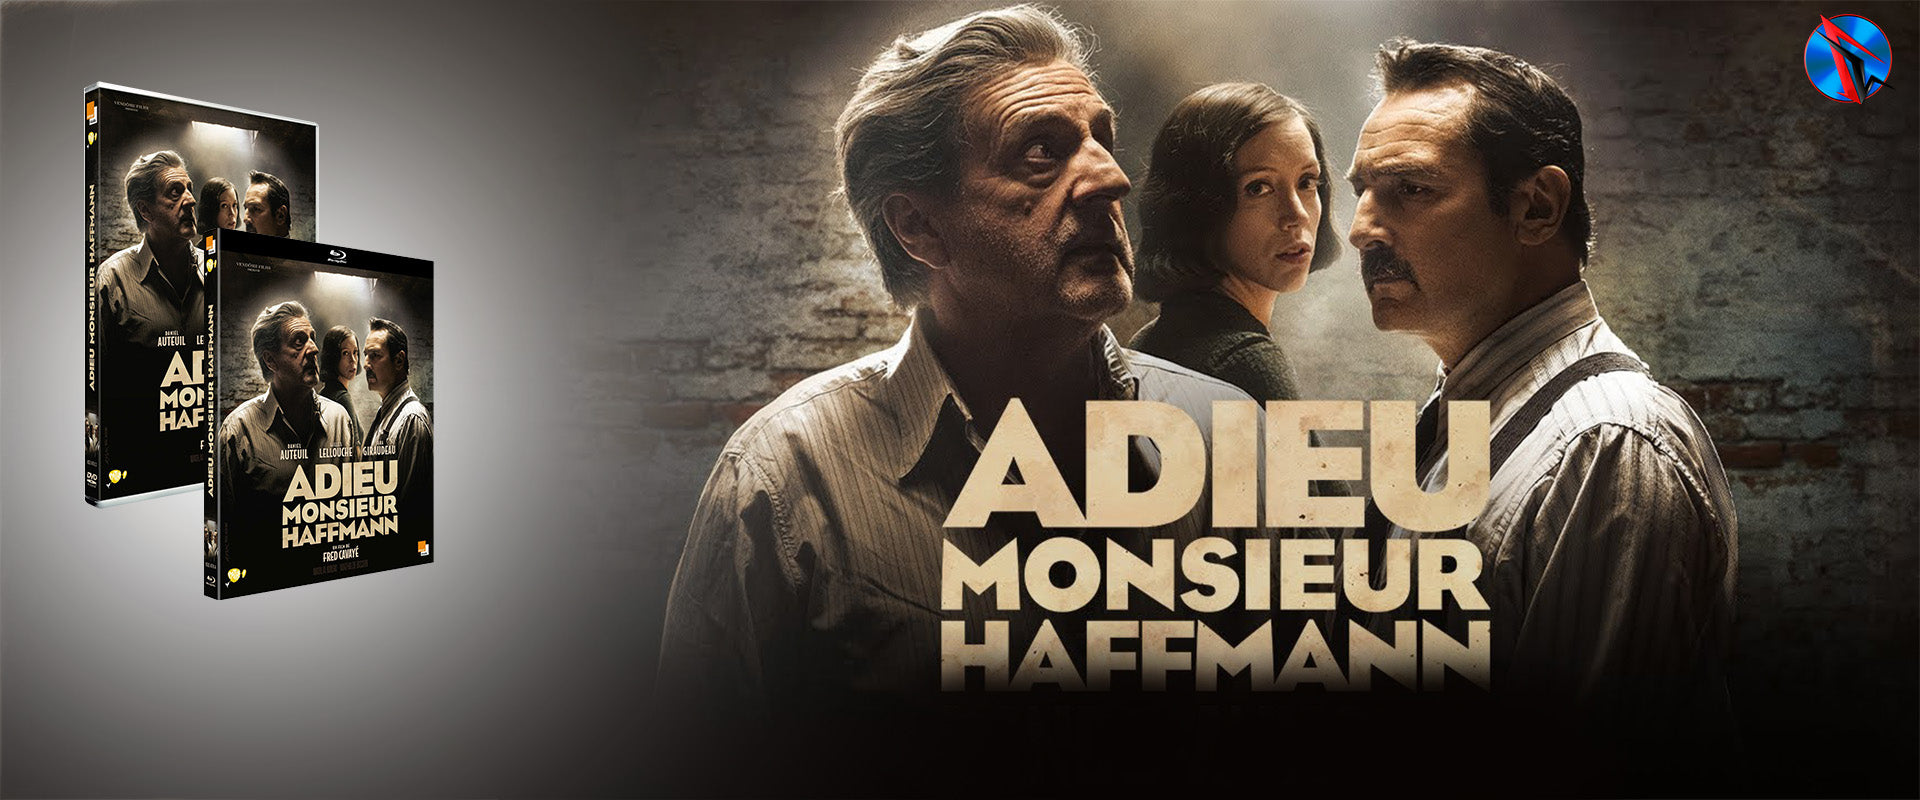 Adieu Monsieur Haffmann en DVD et Blu-Ray